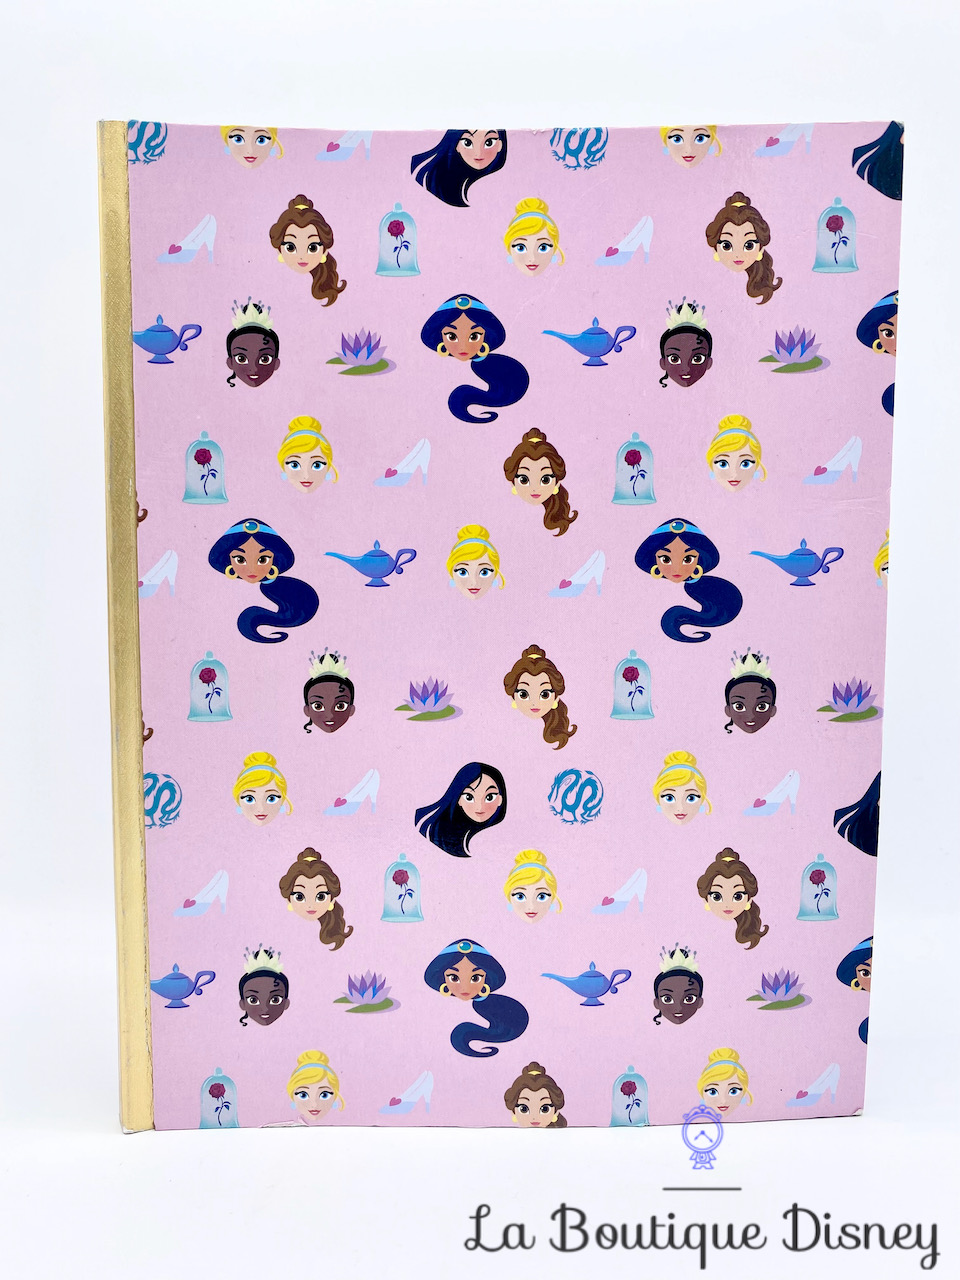 Carnet Secret Princesse Disney avec Crayon - MaxxiDiscount